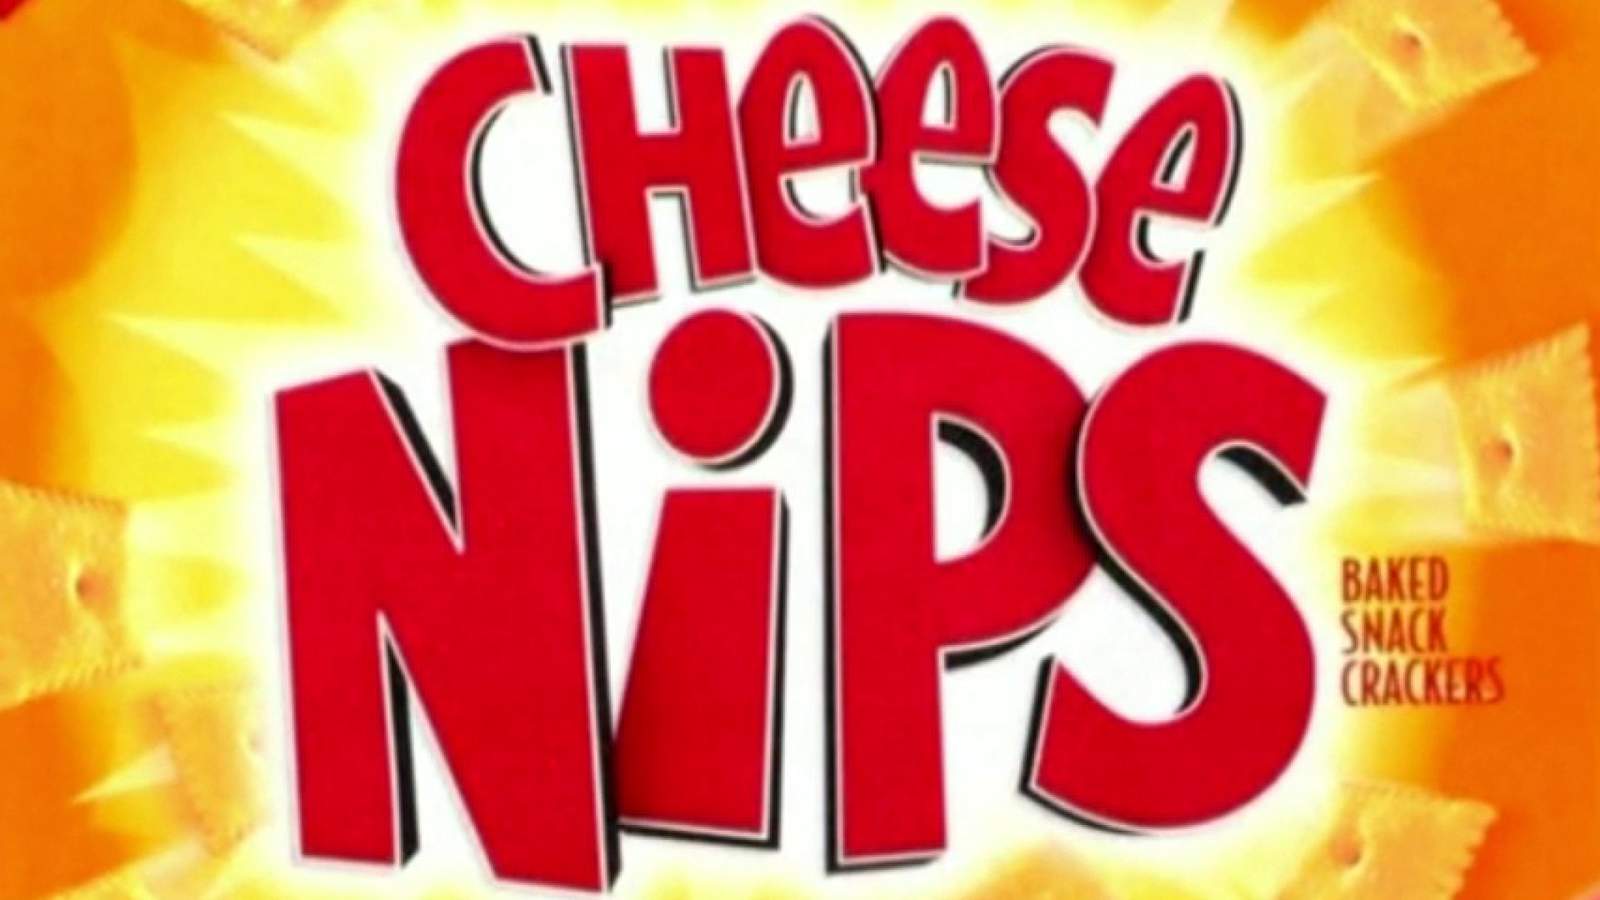 Nabisco voluntarily recalls select boxes of Cheese Nips